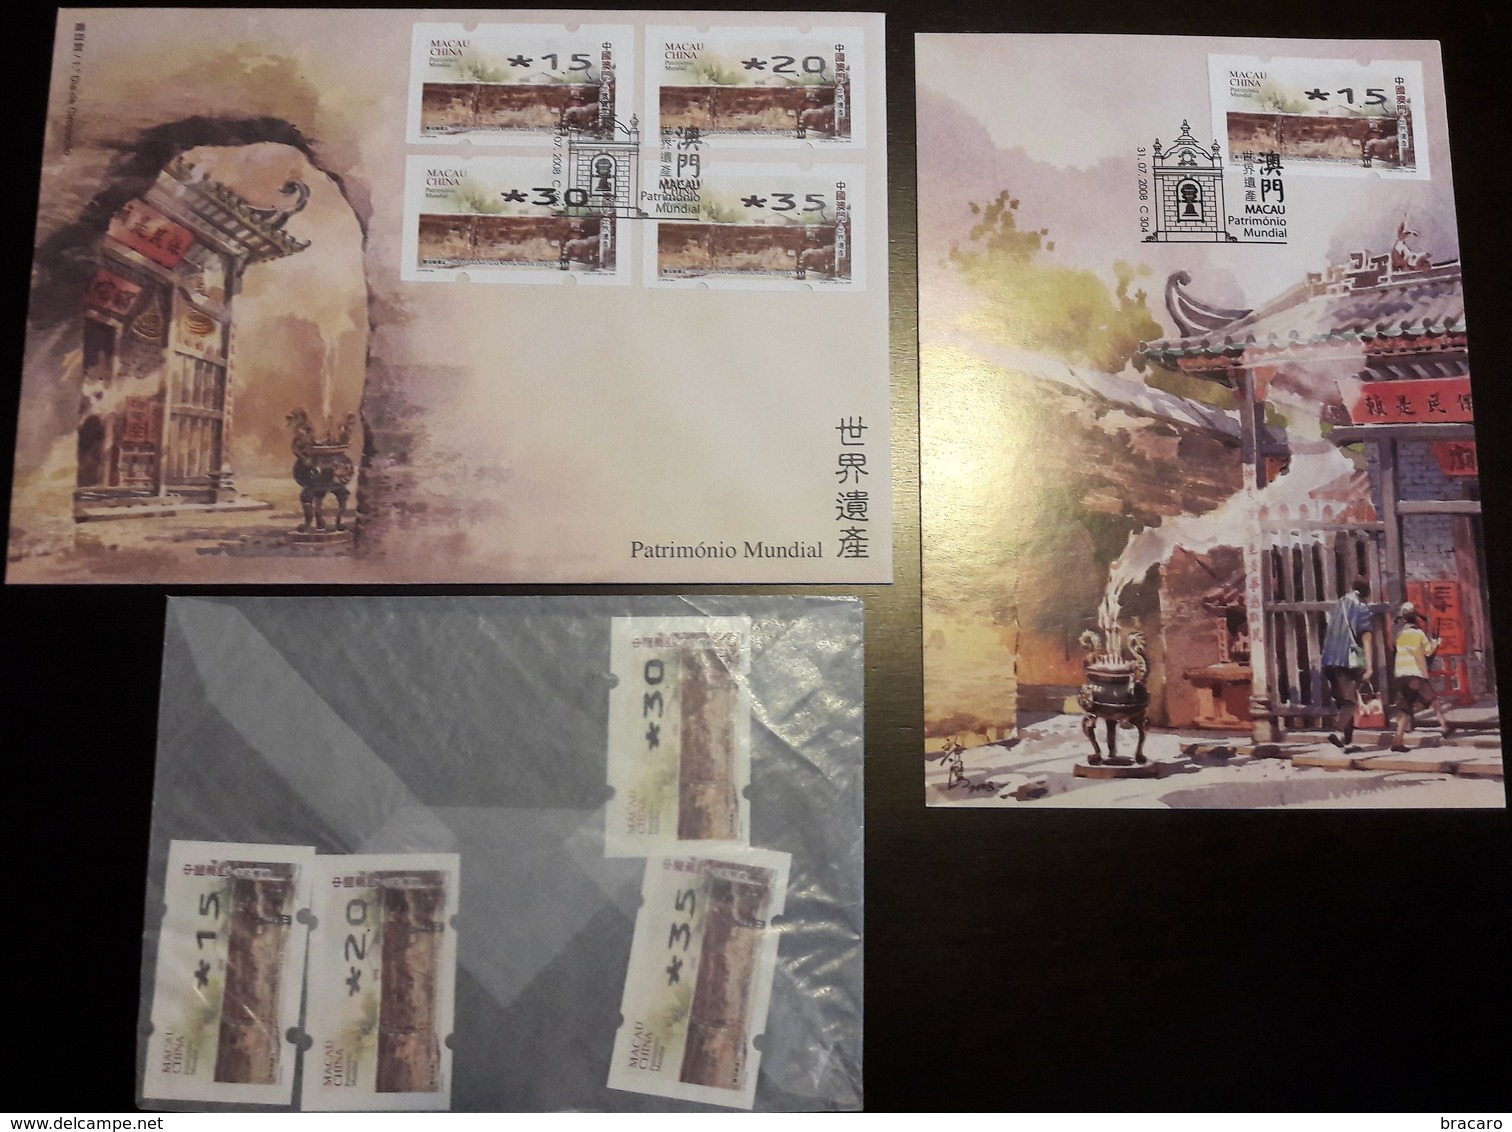 MACAU / MACAO (CHINA) - World Heritage 2008 - Full Set Stamps + FDC + 9 Maximum Cards + Full Set ATM + FDC ATM + Leaflet - Collezioni & Lotti